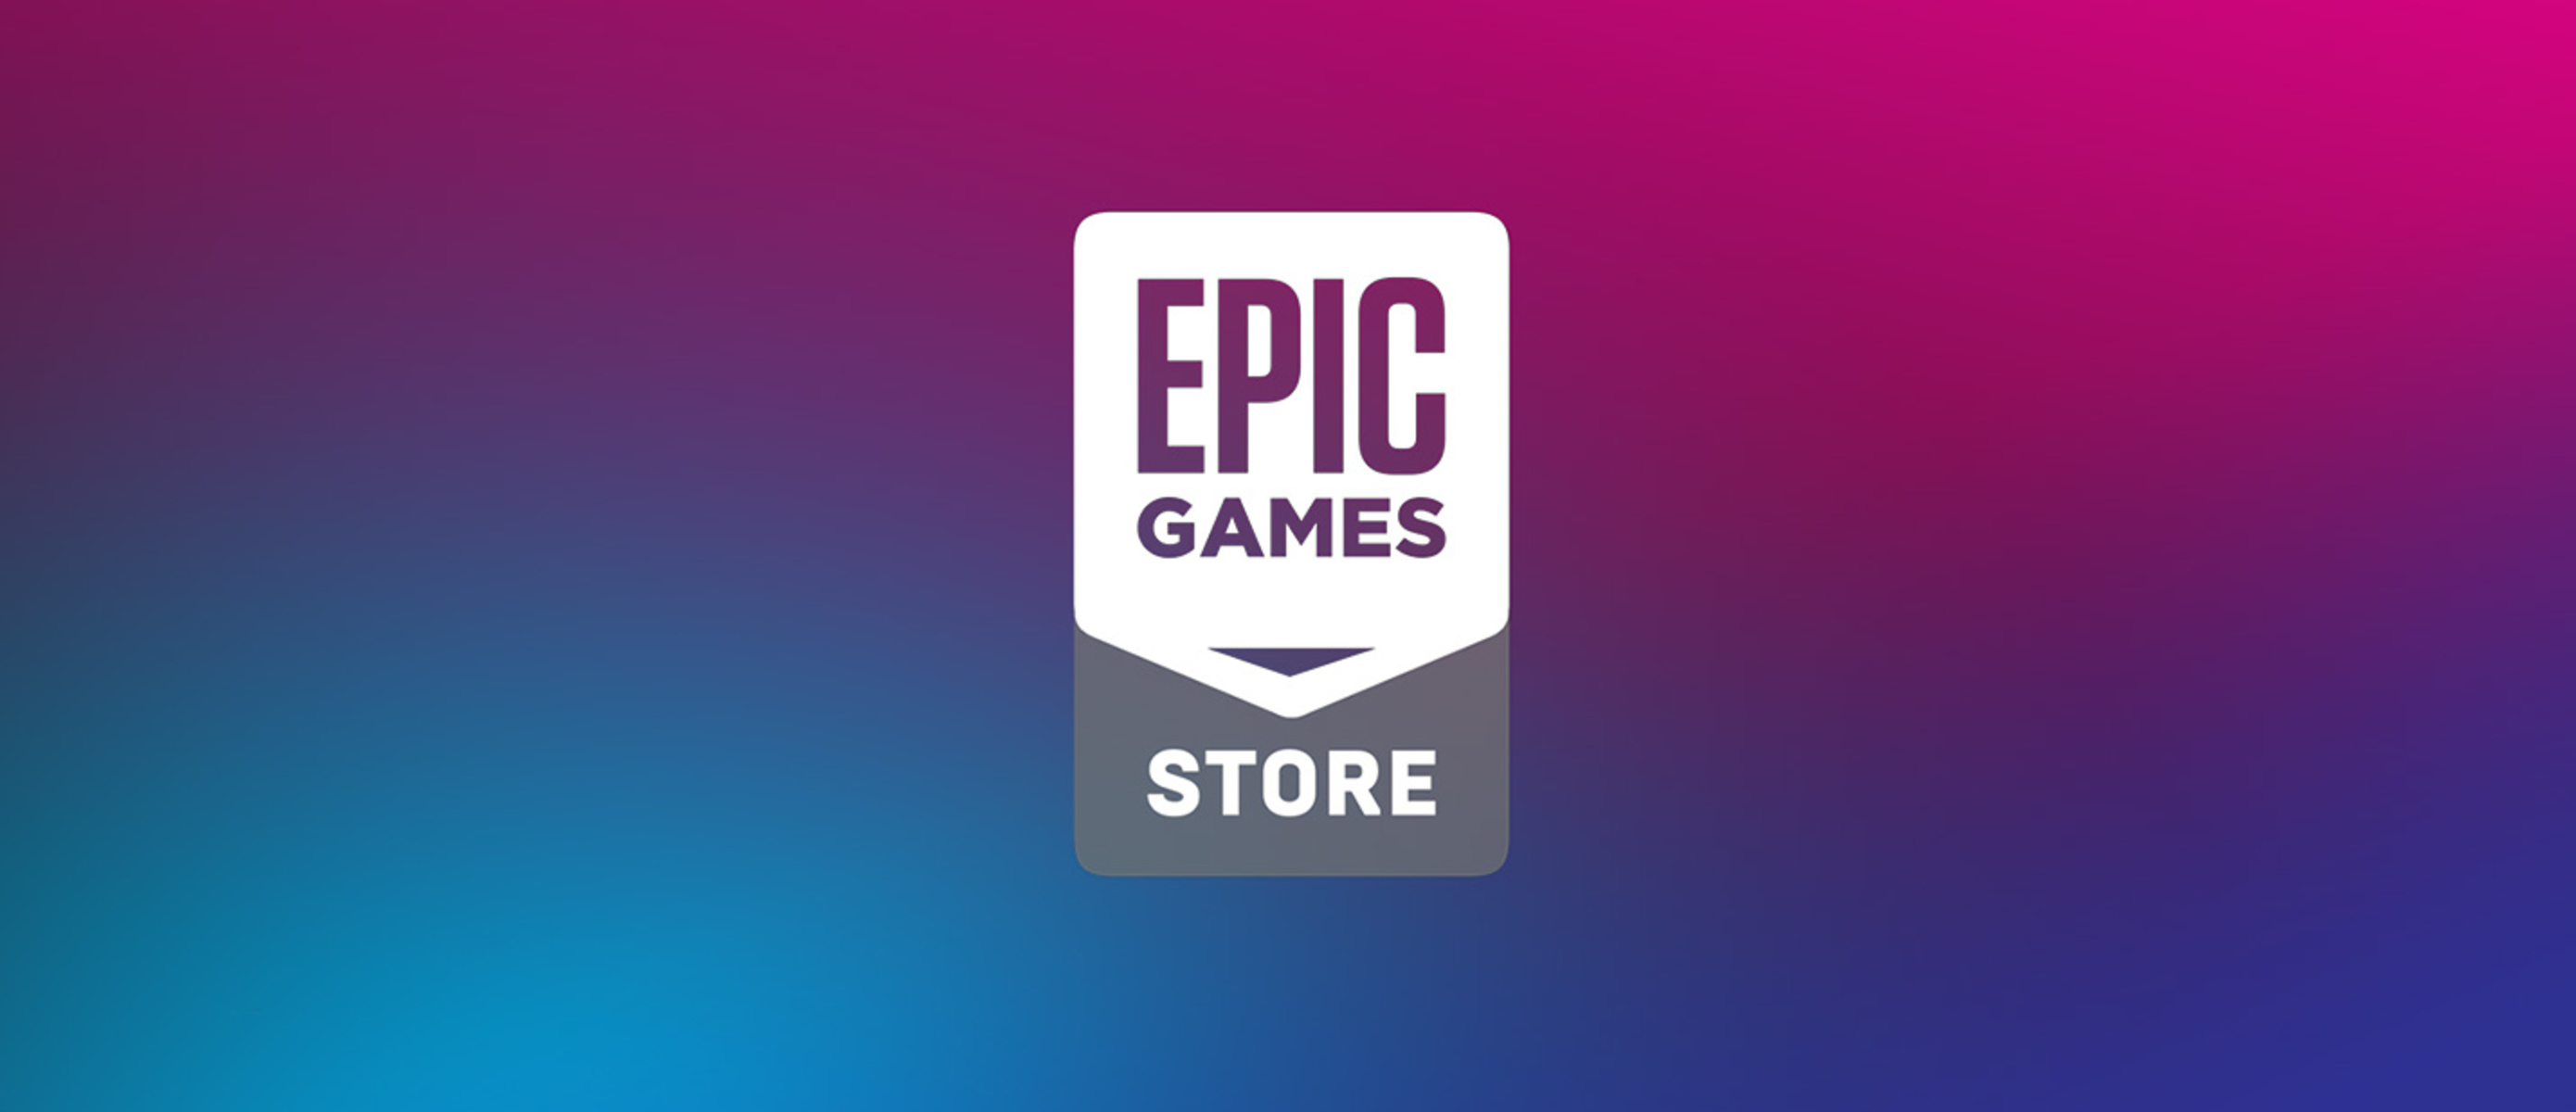 Сайт epic games. Epic games. Иконка ЭПИК геймс. Логотип Epic Store.